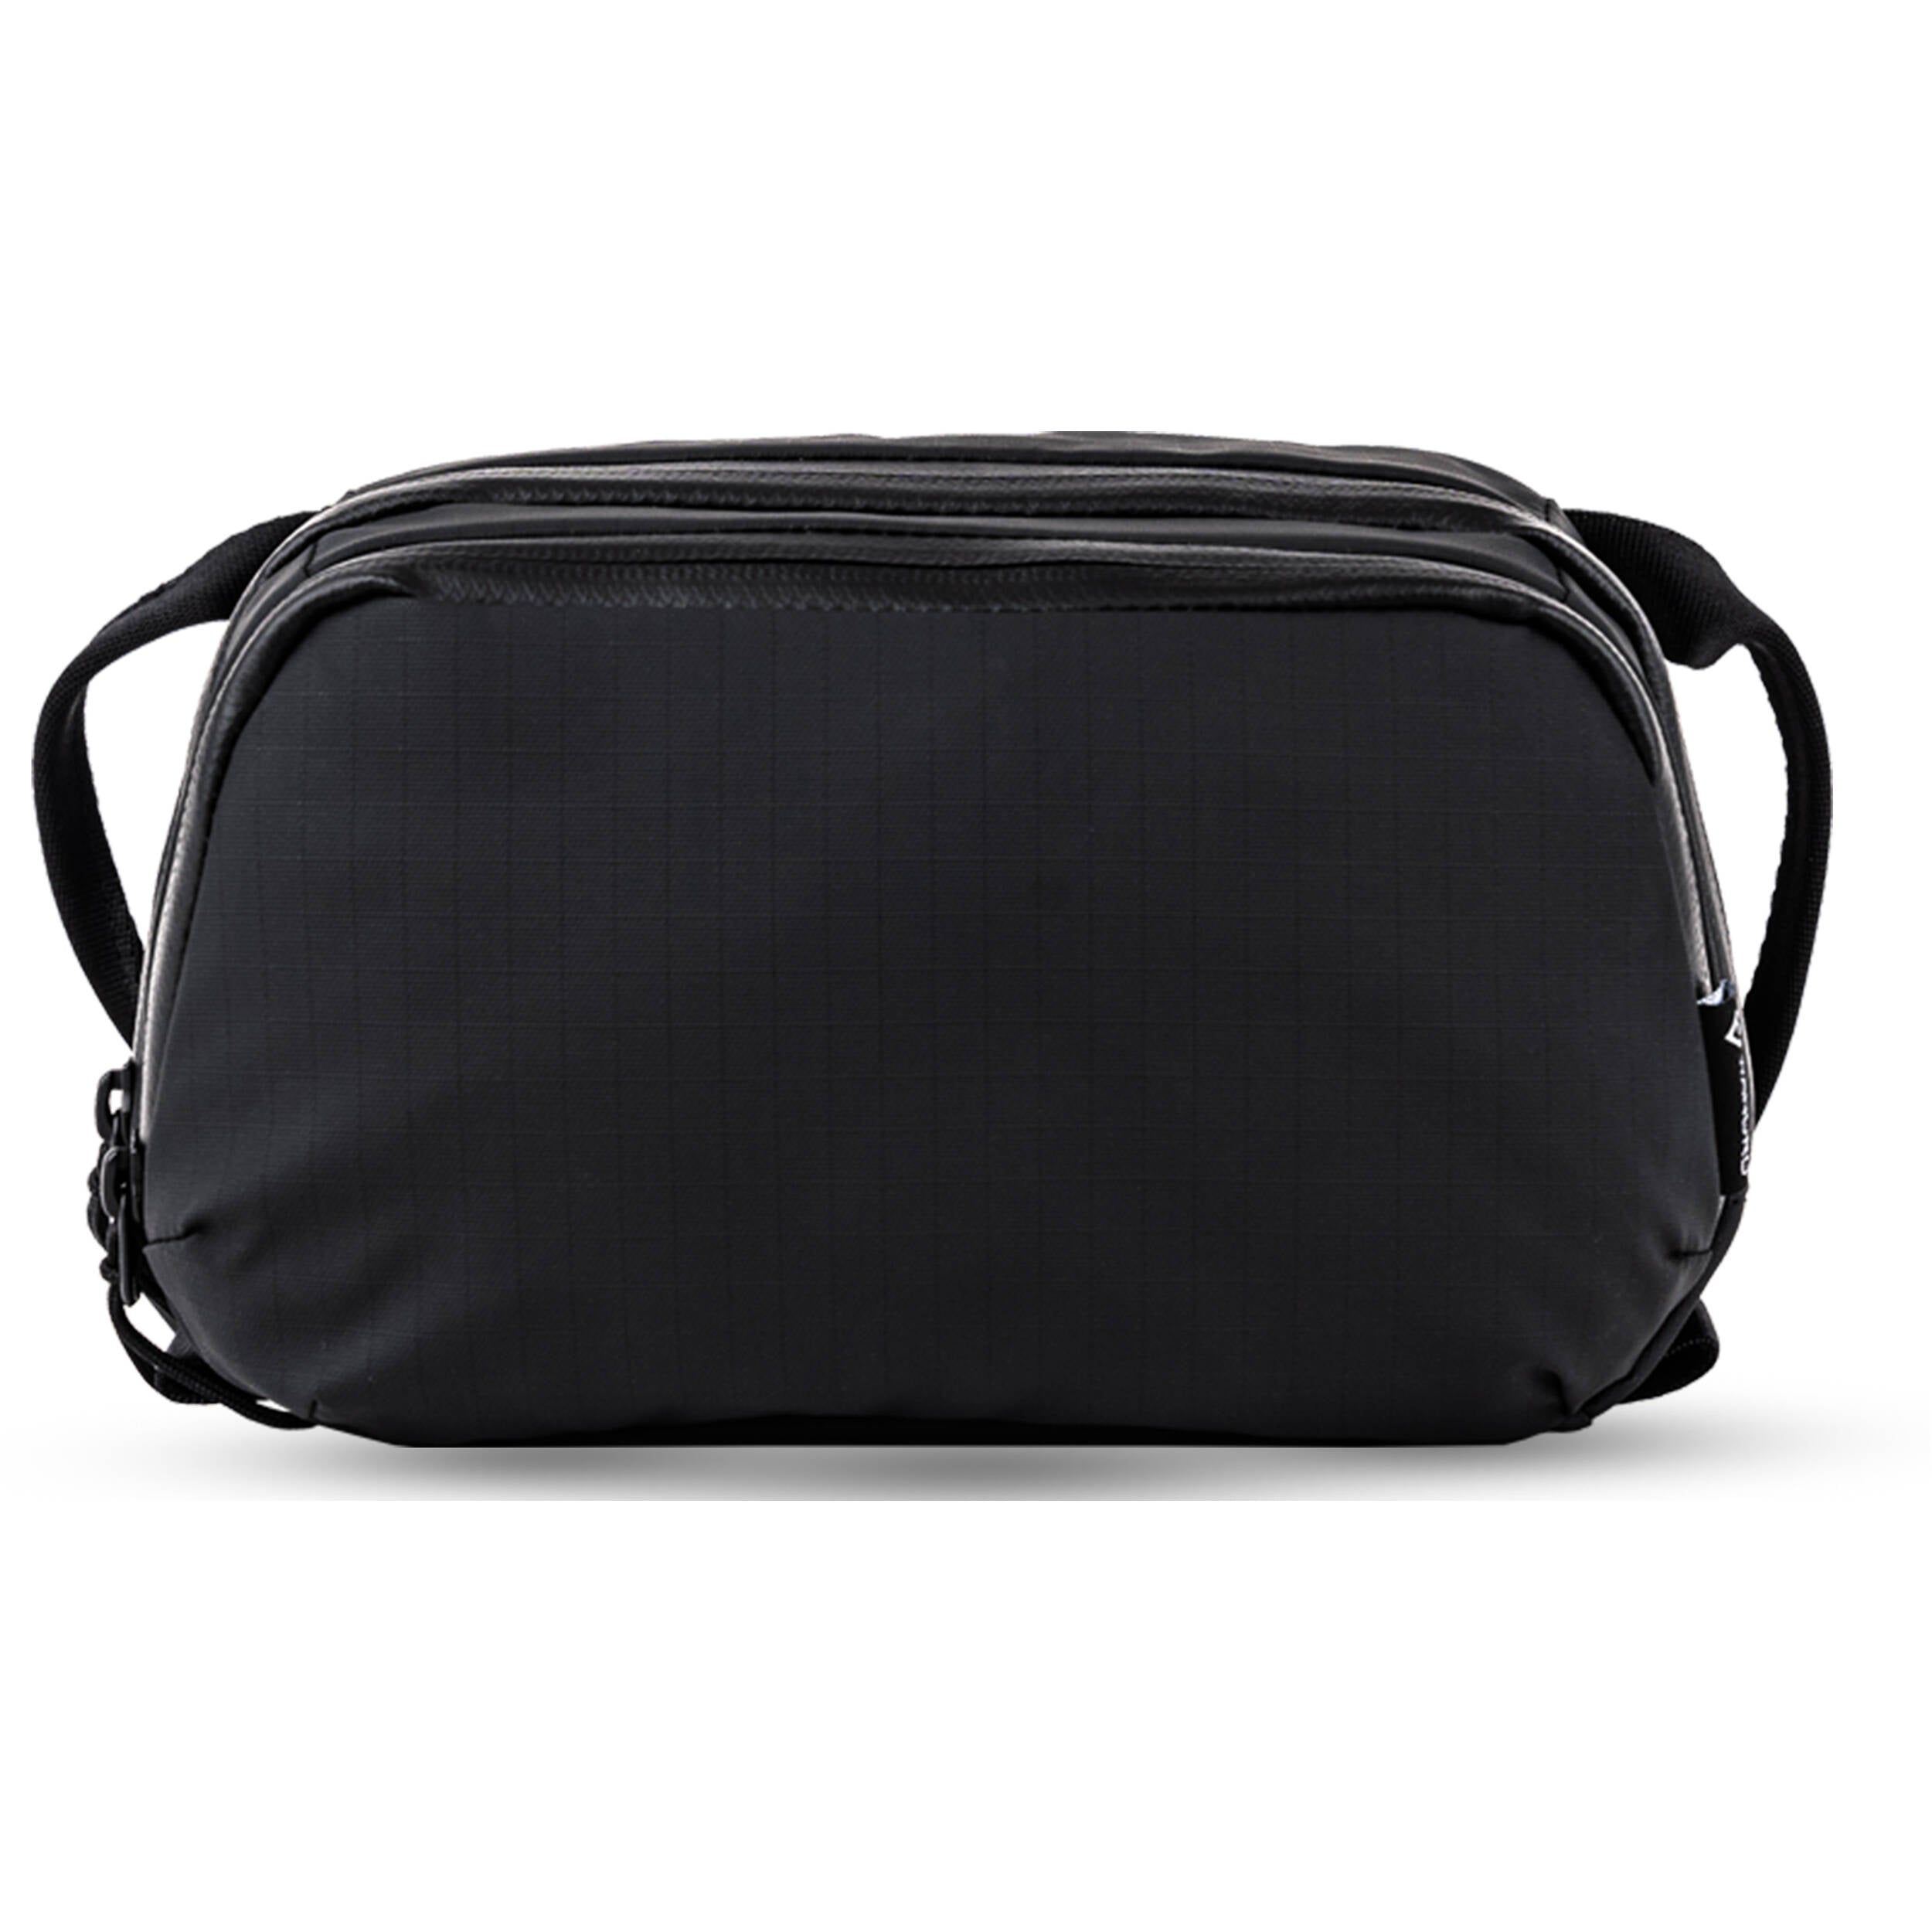 WANDRD Tech Bag - Black - Large